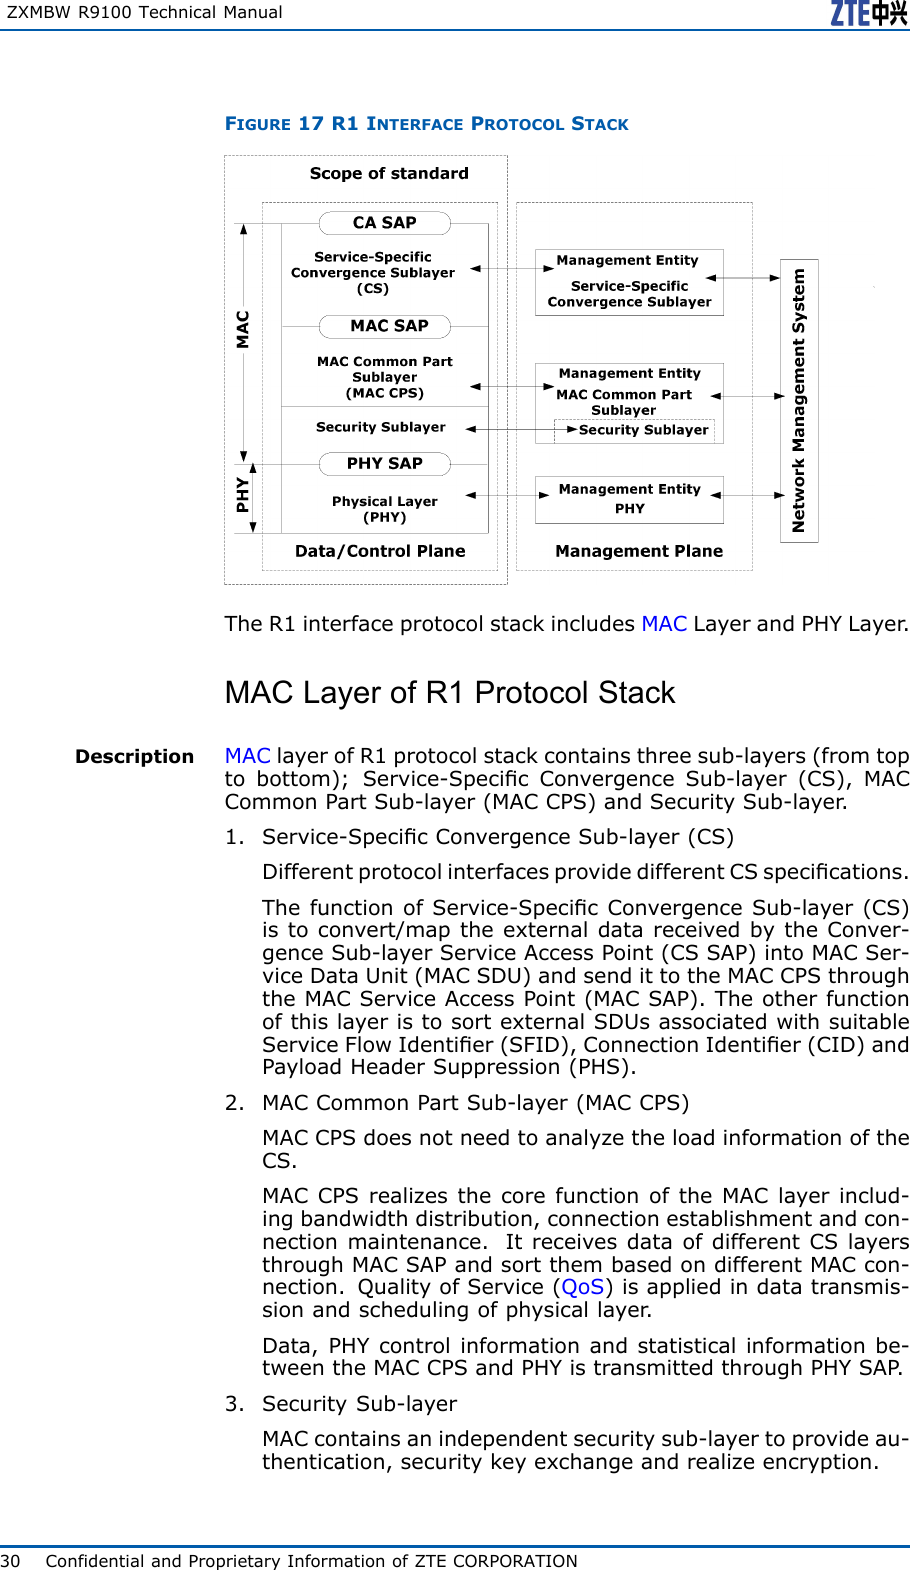 ZXMBWR9100TechnicalManualFIGURE17R1INTERFACEPROTOCOLSTACKTheR1interfaceprotocolstackincludesMACLayerandPHYLayer .MACLayerofR1ProtocolStackDescriptionMAClayerofR1protocolstackcontainsthreesub-layers(fromtoptobottom);Service-SpecicConvergenceSub-layer(CS),MACCommonPartSub-layer(MACCPS)andSecuritySub-layer .1.Service-SpecicConvergenceSub-layer(CS)DifferentprotocolinterfacesprovidedifferentCSspecications.ThefunctionofService-SpecicConvergenceSub-layer(CS)istoconvert/maptheexternaldatareceivedbytheConver-genceSub-layerServiceAccessPoint(CSSAP)intoMACSer-viceDataUnit(MACSDU)andsendittotheMACCPSthroughtheMACServiceAccessPoint(MACSAP).TheotherfunctionofthislayeristosortexternalSDUsassociatedwithsuitableServiceFlowIdentier(SFID),ConnectionIdentier(CID)andPayloadHeaderSuppression(PHS).2.MACCommonPartSub-layer(MACCPS)MACCPSdoesnotneedtoanalyzetheloadinformationoftheCS.MACCPSrealizesthecorefunctionoftheMAClayerinclud-ingbandwidthdistribution,connectionestablishmentandcon-nectionmaintenance.ItreceivesdataofdifferentCSlayersthroughMACSAPandsortthembasedondifferentMACcon-nection.QualityofService(QoS)isappliedindatatransmis-sionandschedulingofphysicallayer .Data,PHYcontrolinformationandstatisticalinformationbe-tweentheMACCPSandPHYistransmittedthroughPHYSAP .3.SecuritySub-layerMACcontainsanindependentsecuritysub-layertoprovideau-thentication,securitykeyexchangeandrealizeencryption.30ConfidentialandProprietaryInformationofZTECORPORATION